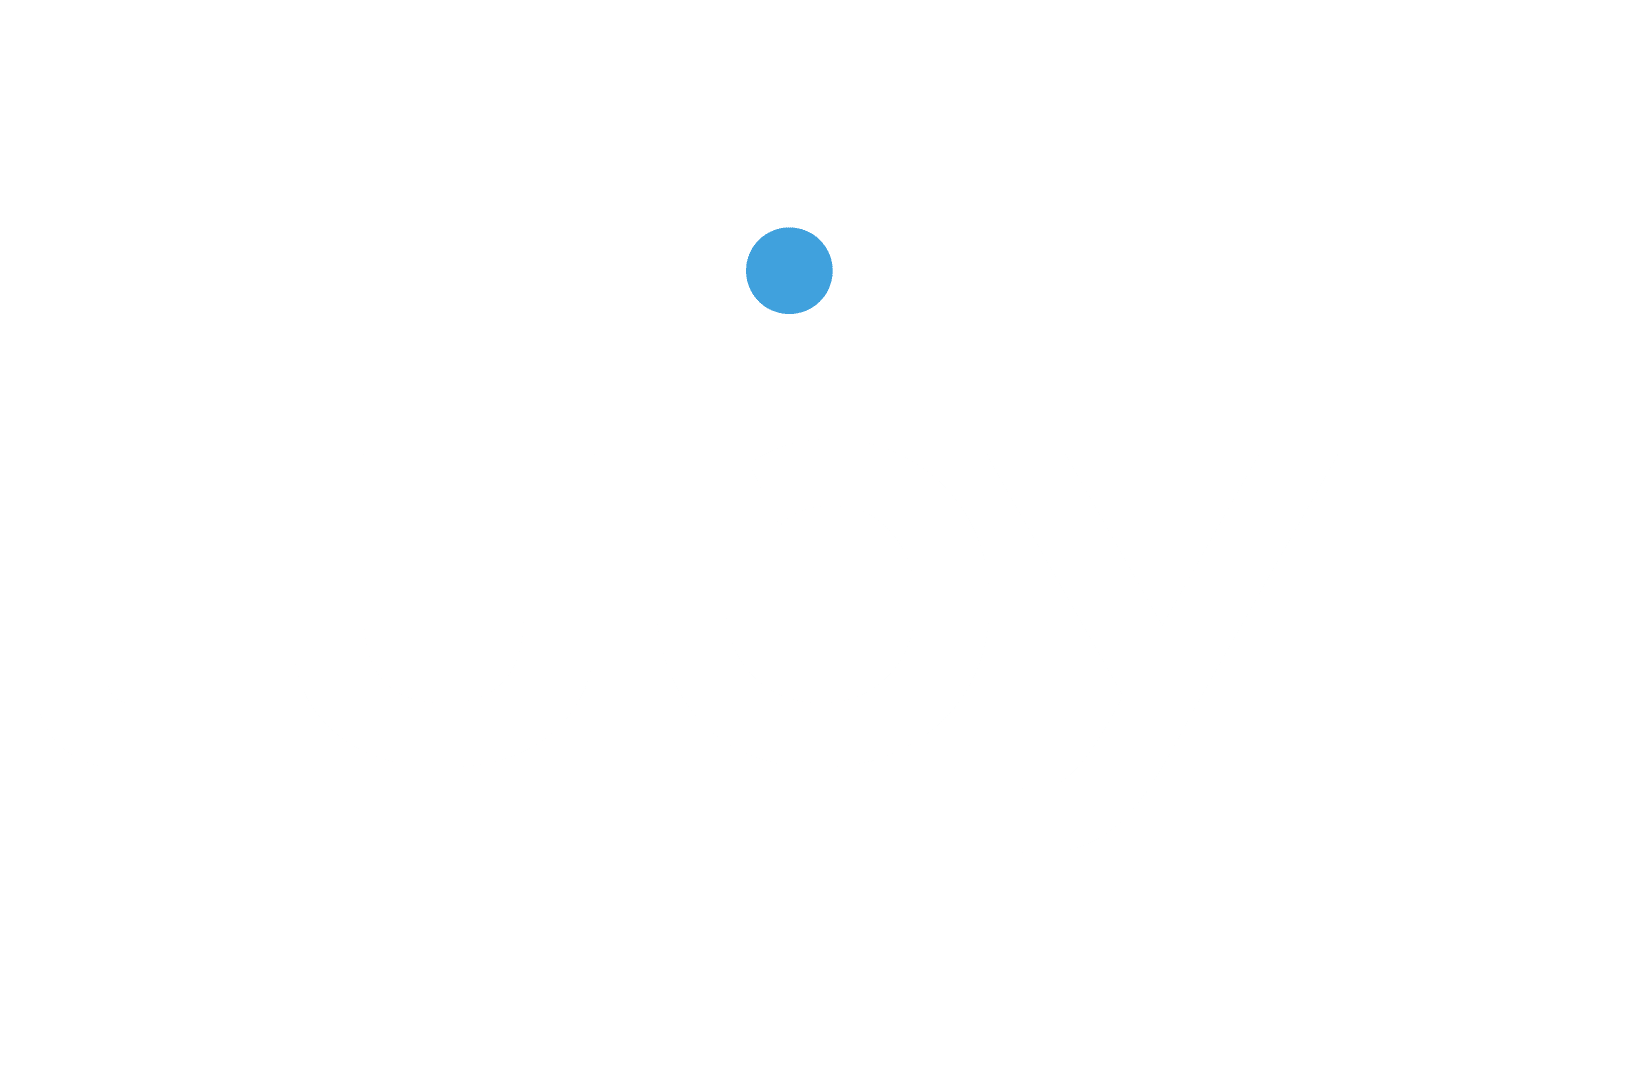 Seja Luber Old Luby Software